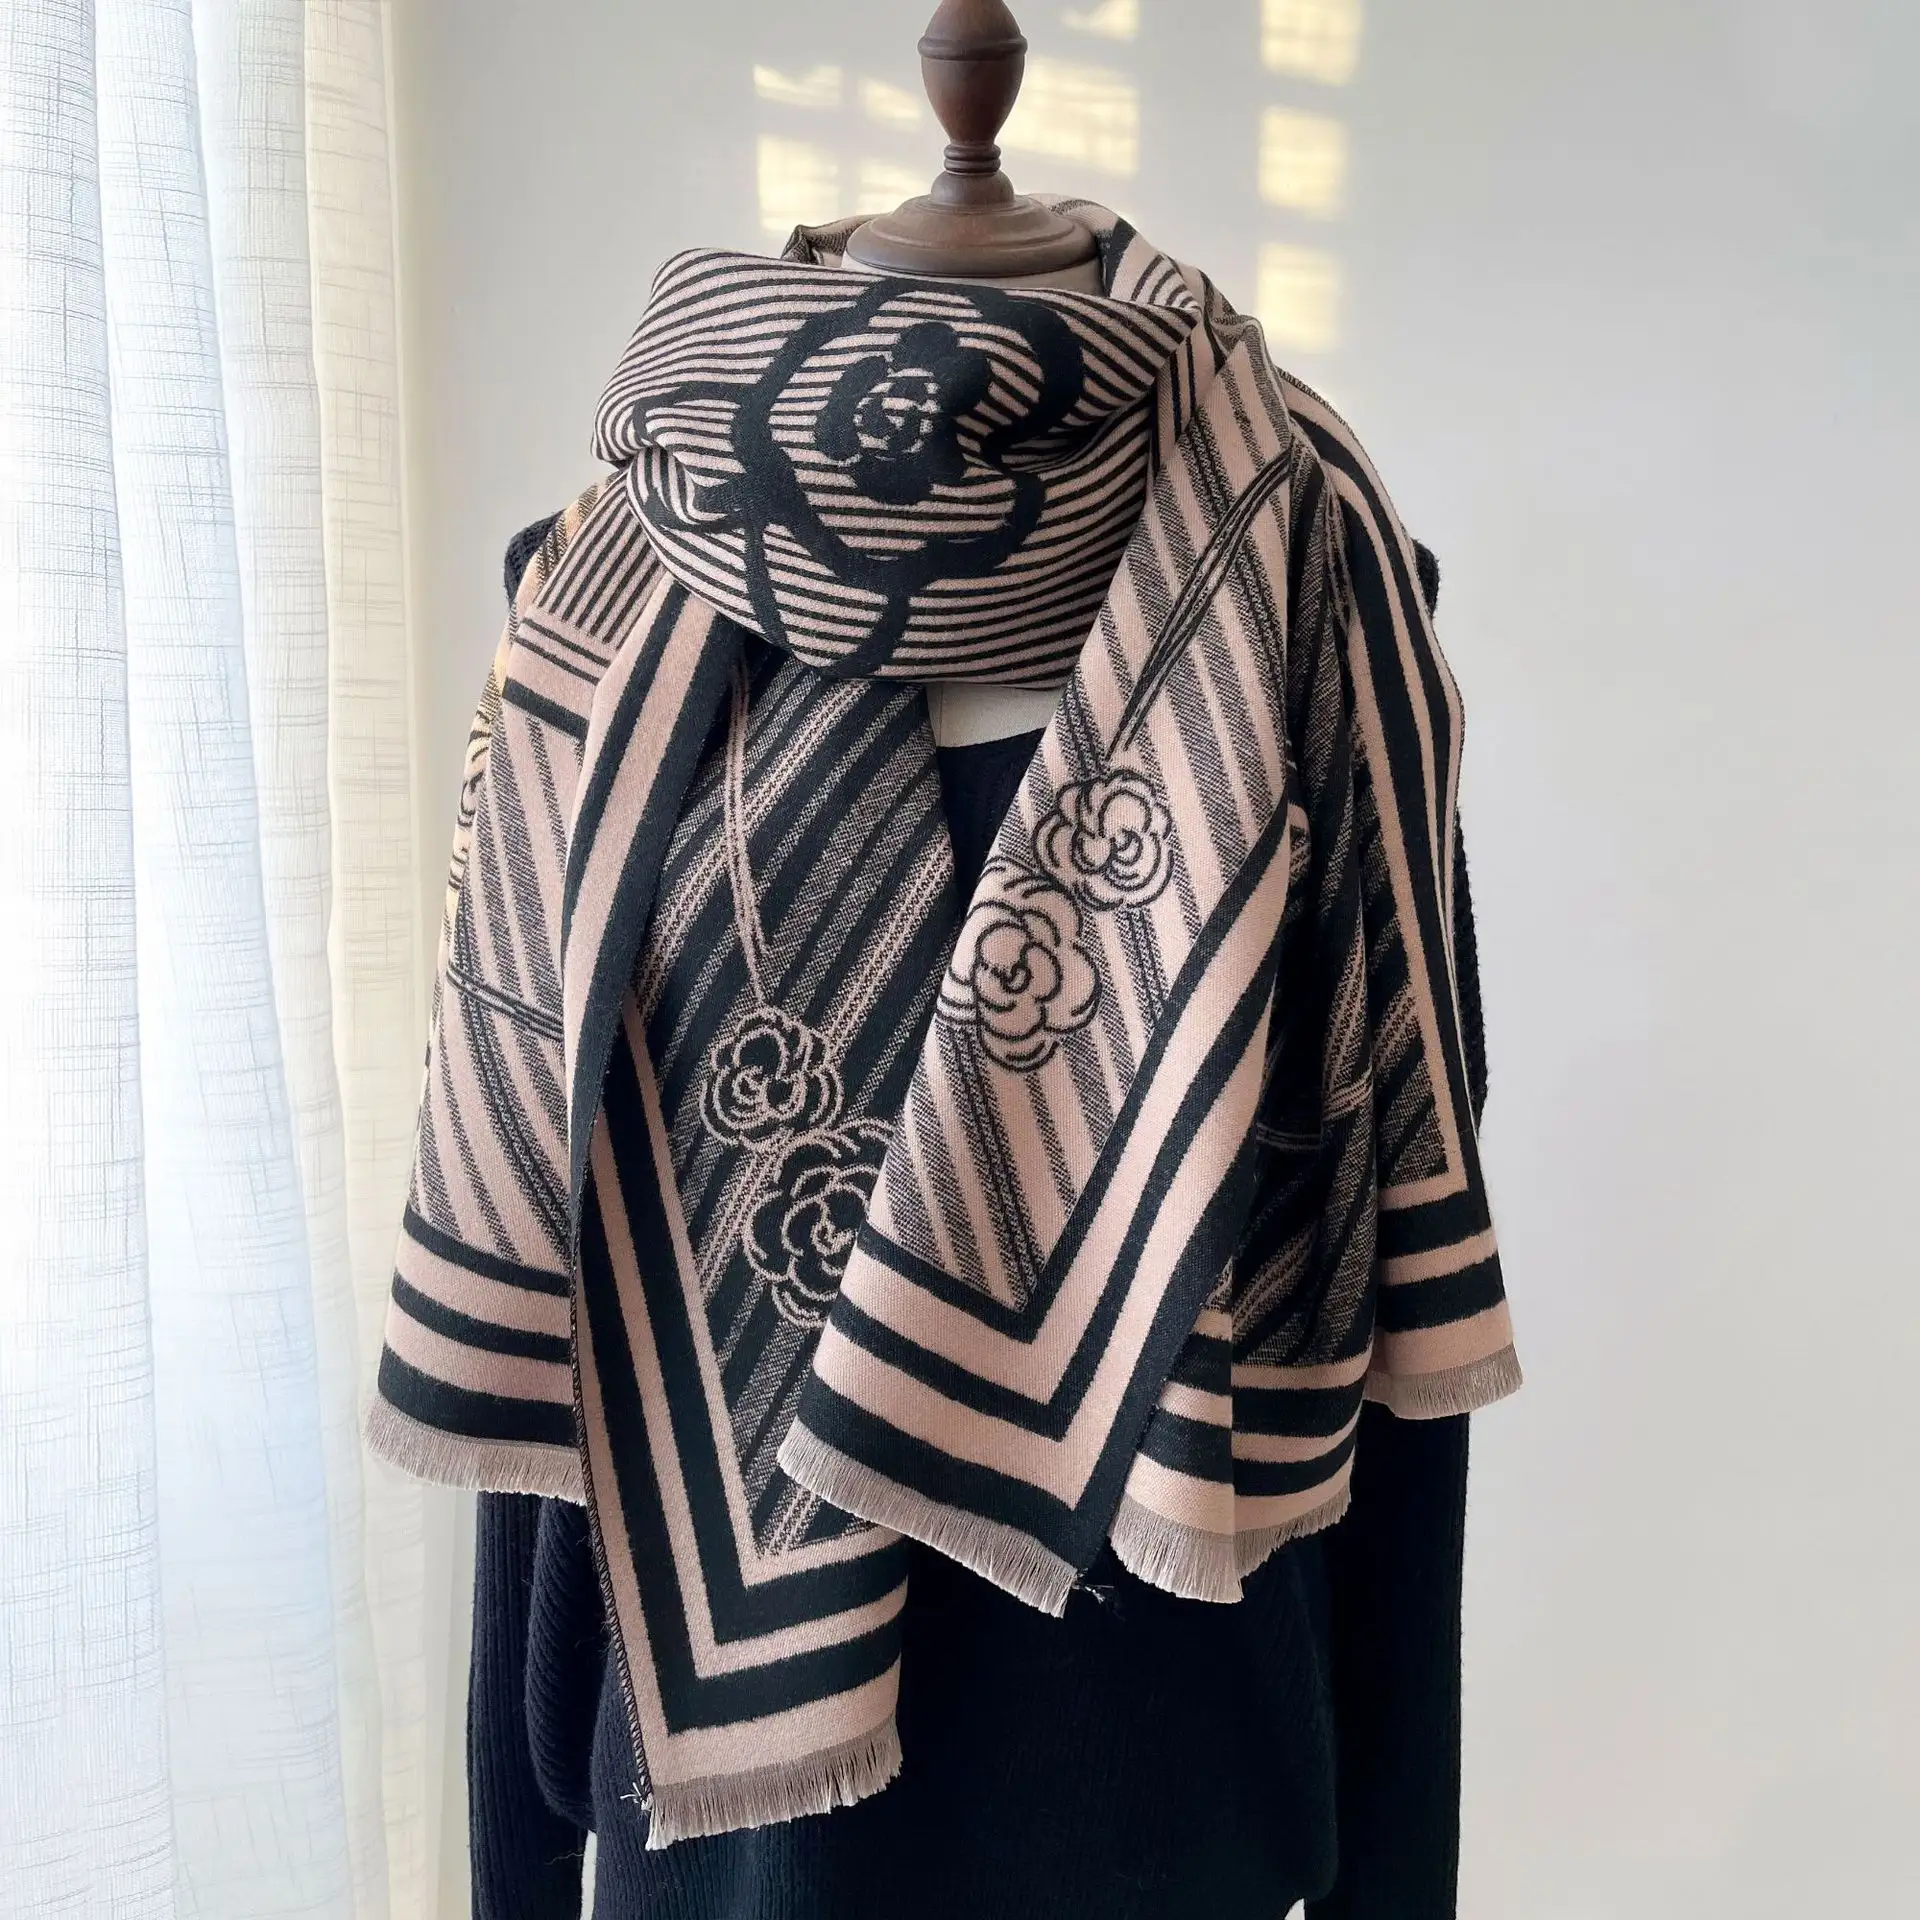 Cashmere Scarf Winter Bufanda Women Shawls Warm Wraps Lady Paisley Print Fashion Pashmina Thick Blanket Foulard